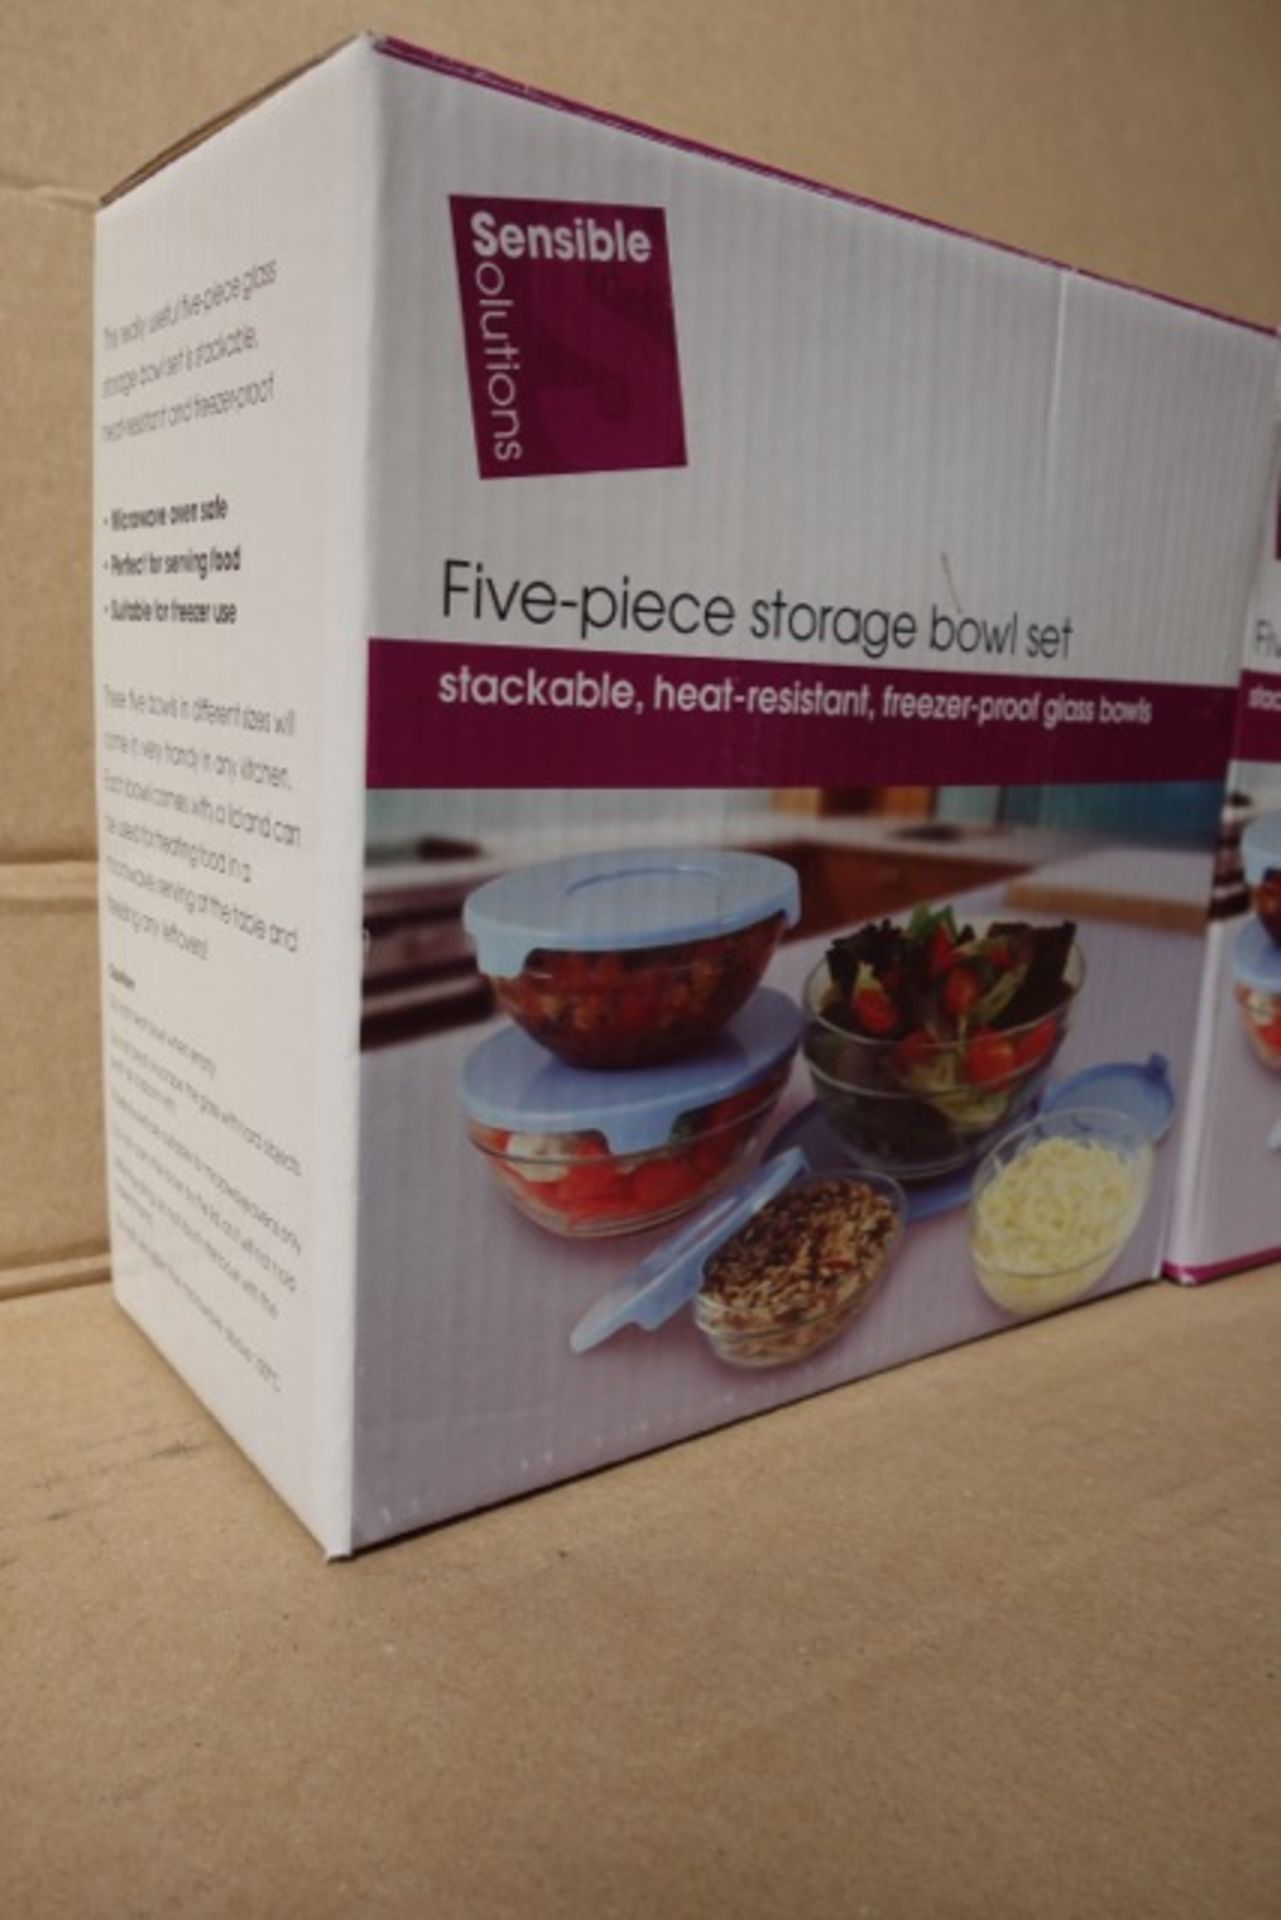 36 x Sensible Solutions Five-Piece Storage Bowl Set's. Stackable, heat resistant, freezer-proof - Image 3 of 4